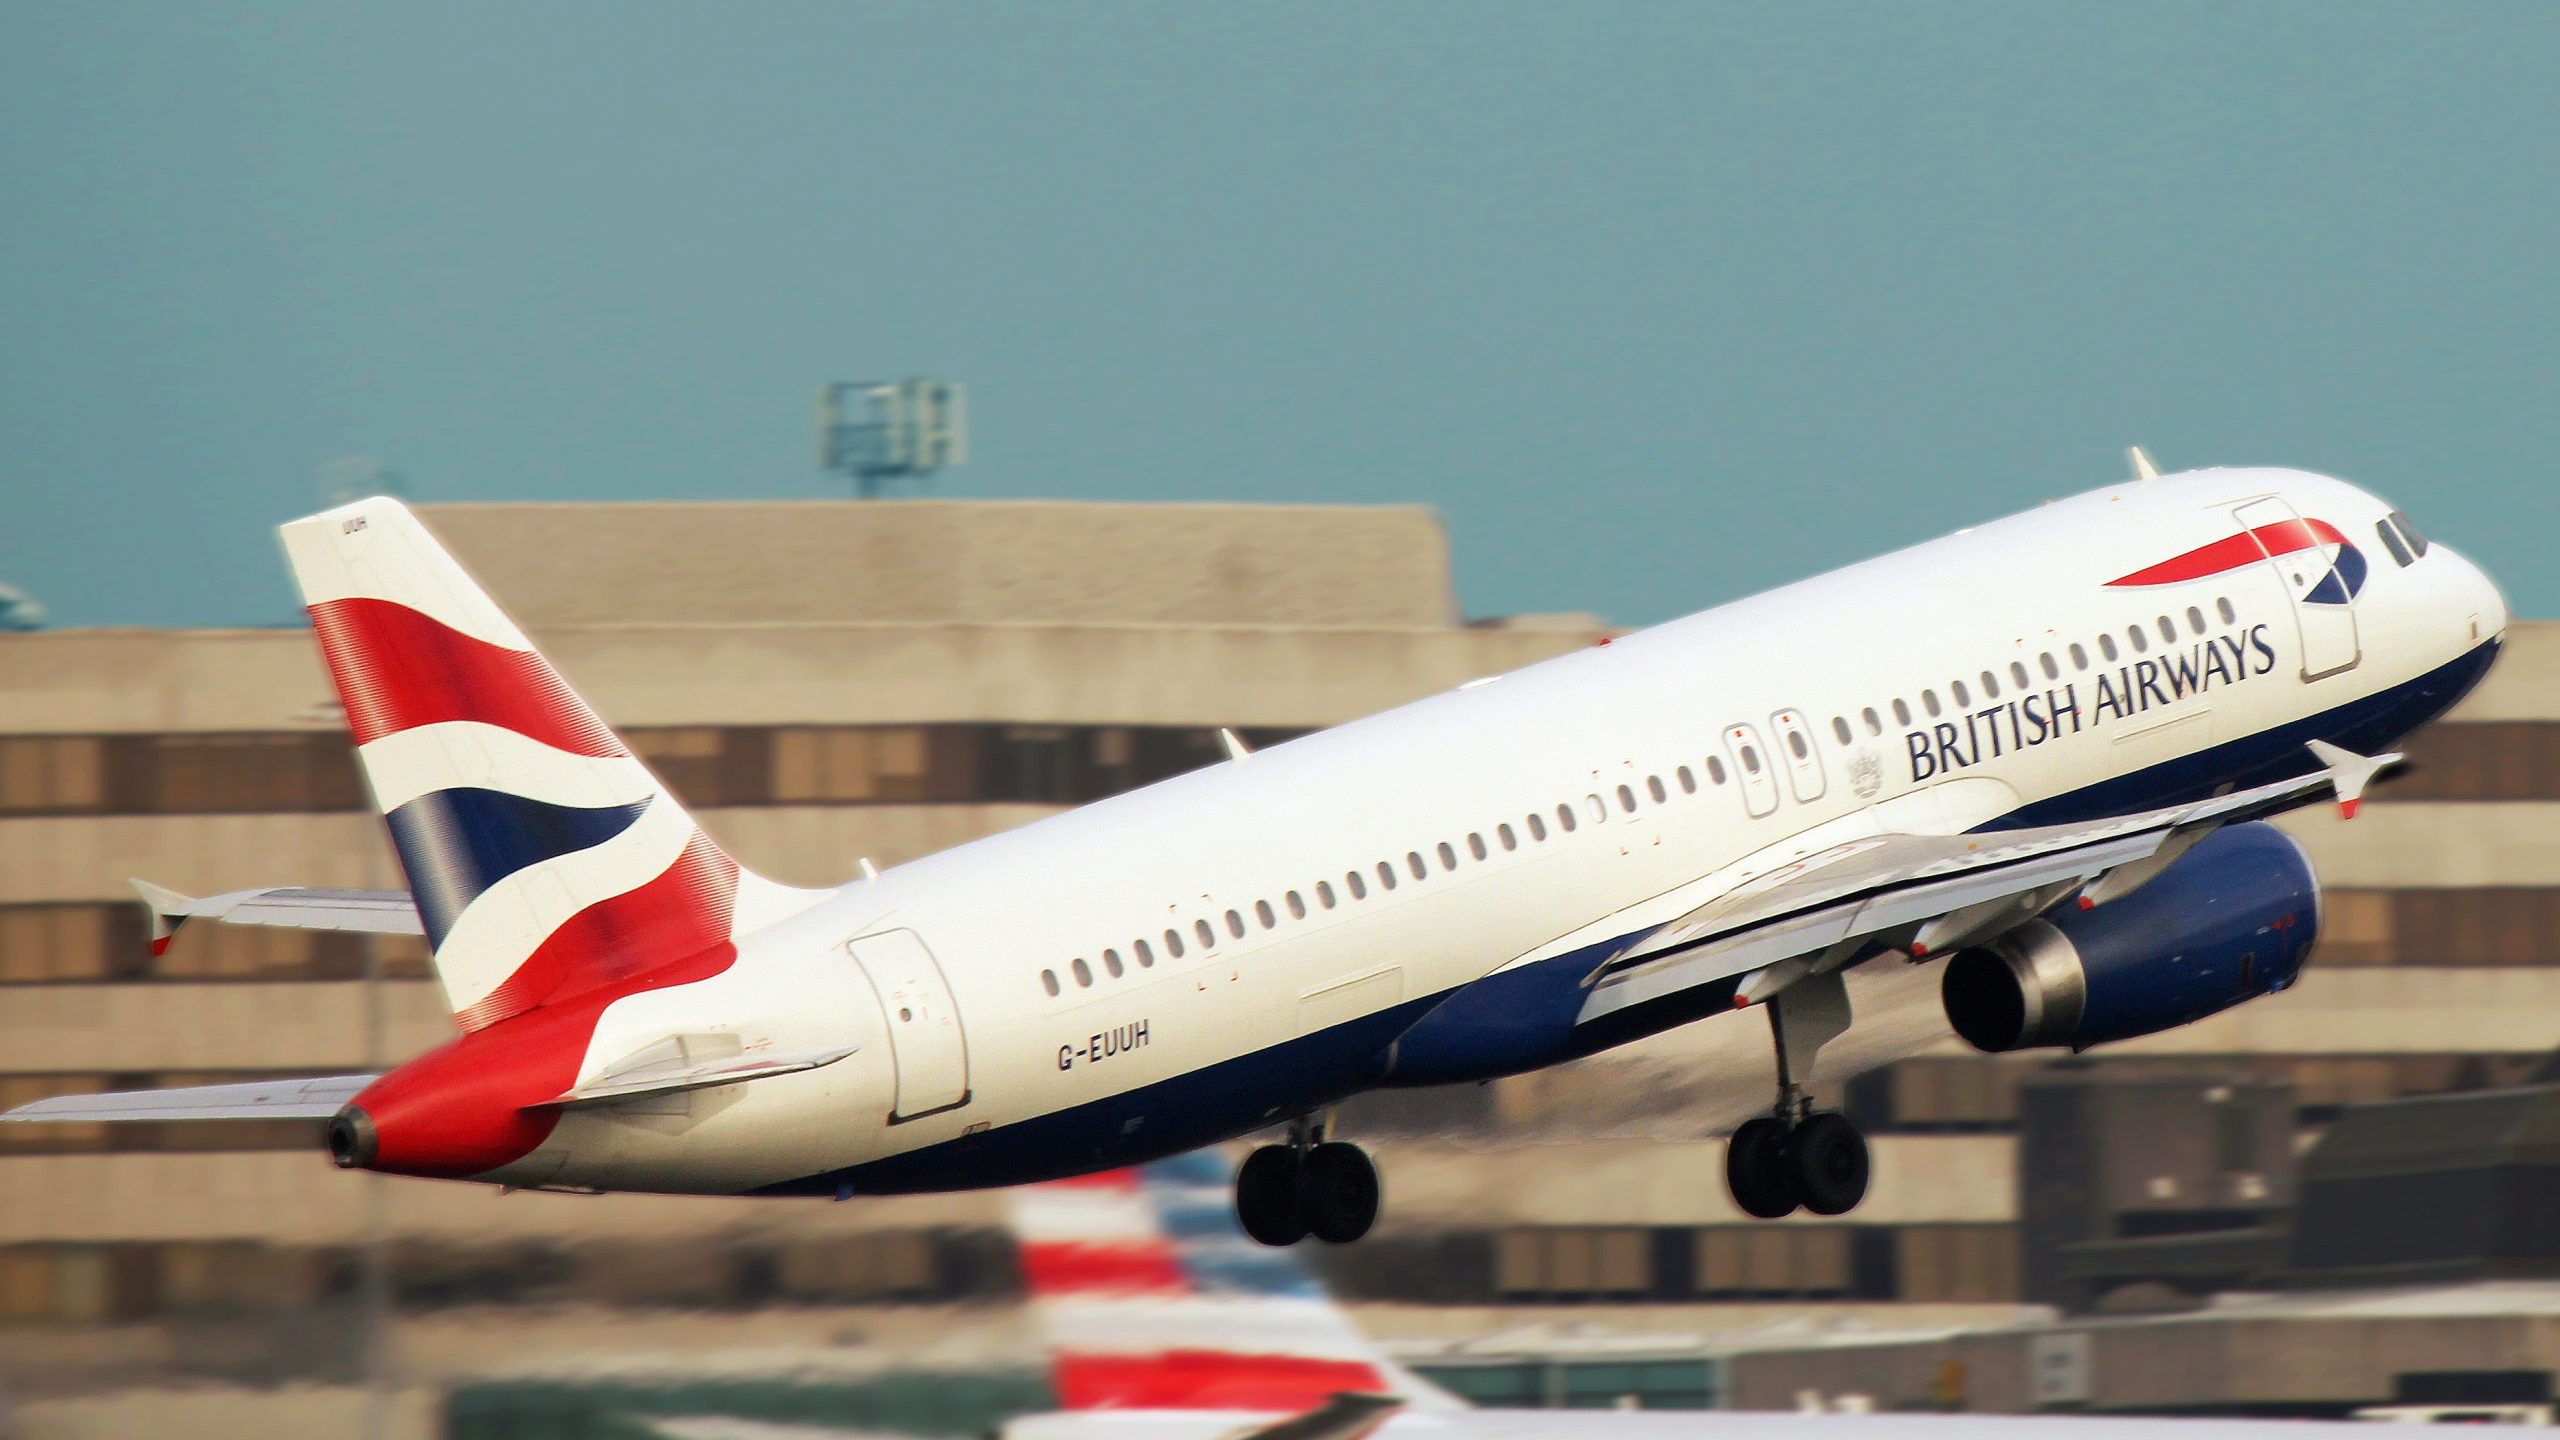 A photo of a British Airways airplane taking off.